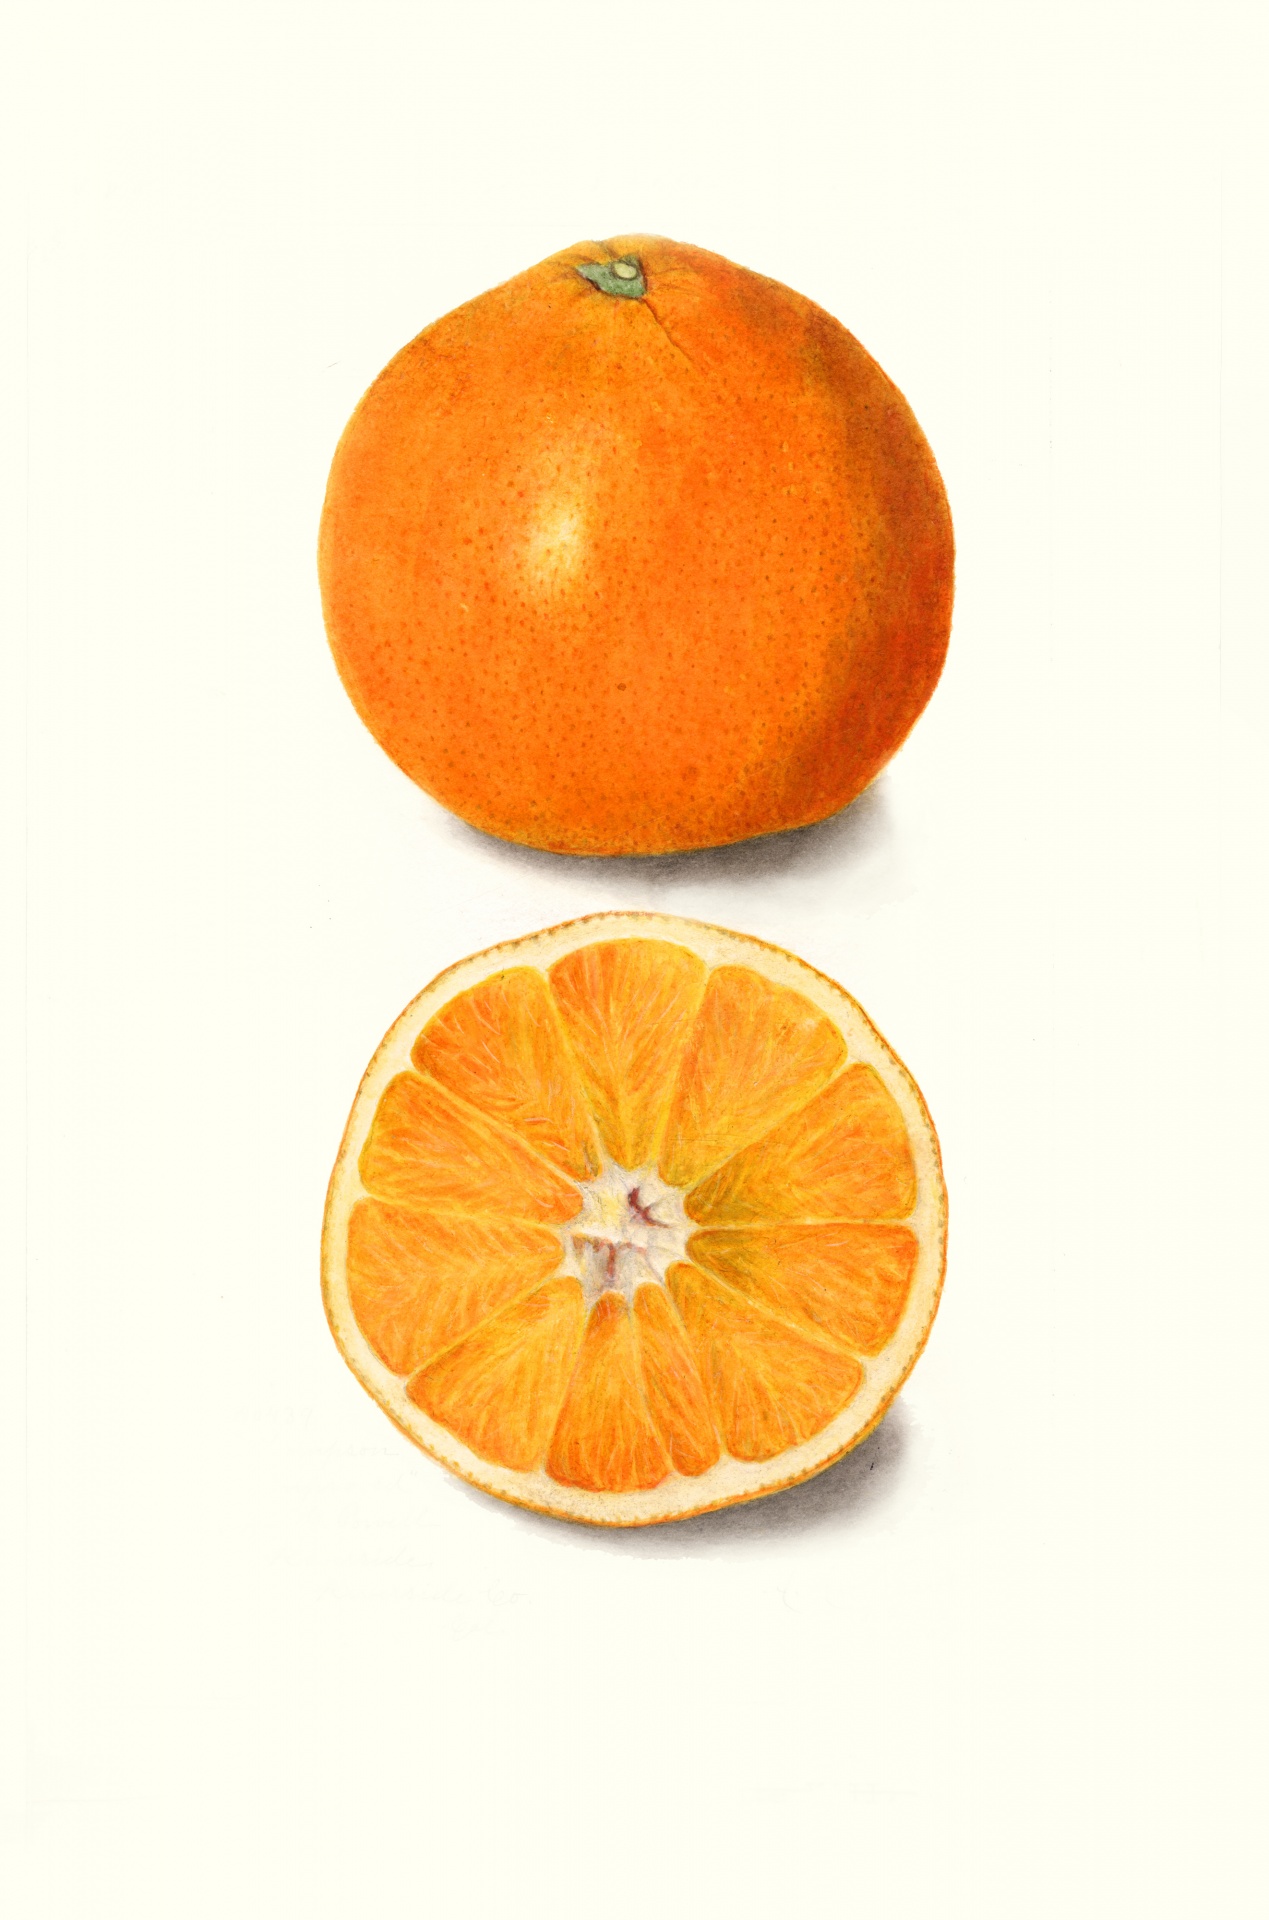 Annata di frutta di frutta arancione